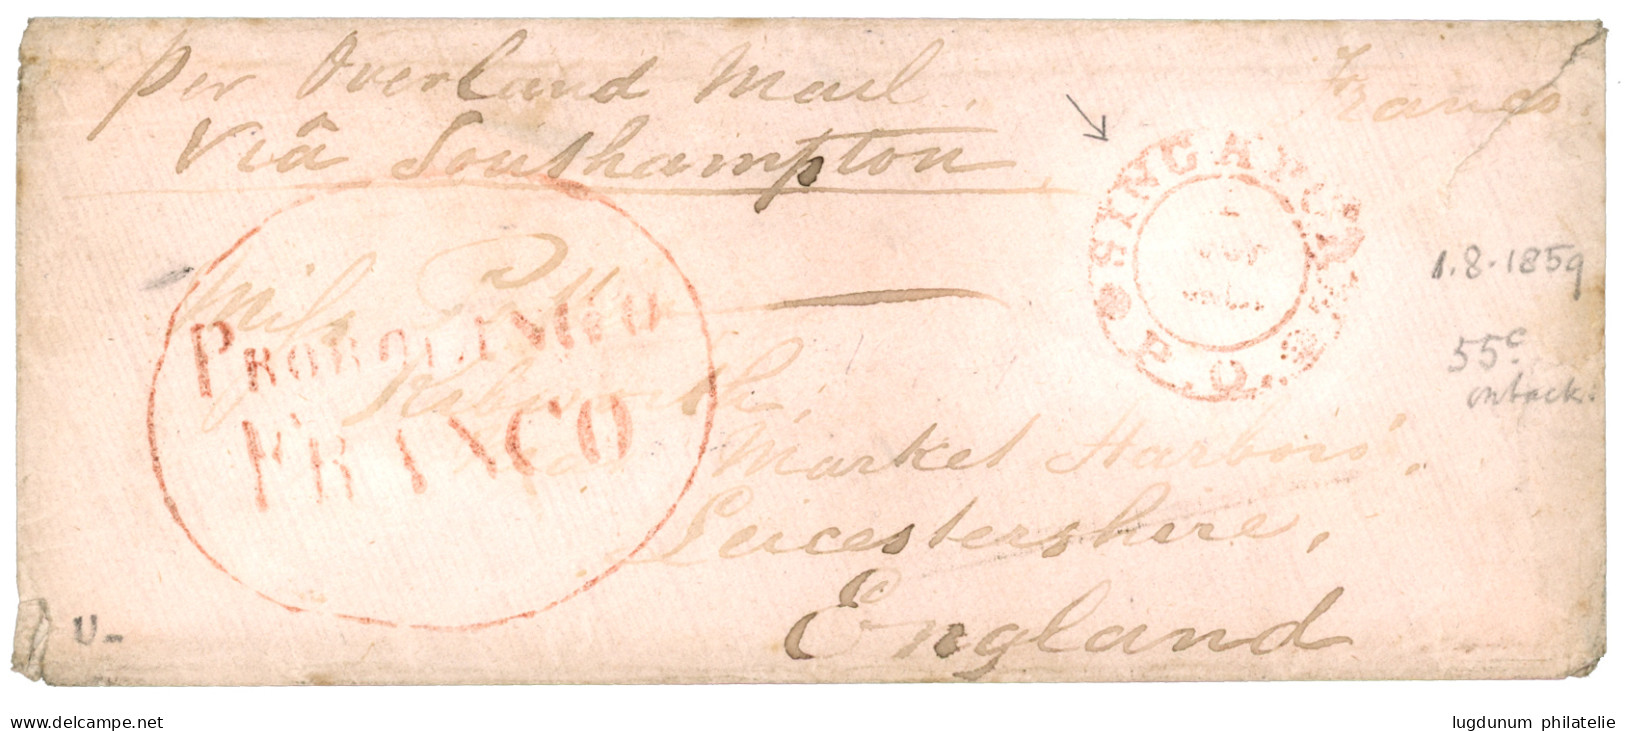 1859 SINGAPORE P.O. In Red + PROBOLINGO FRANCO Red  On Envelope "OVERLAND MAIL" To ENGLAND. NBVV Certificate (2000). Rar - Indes Néerlandaises